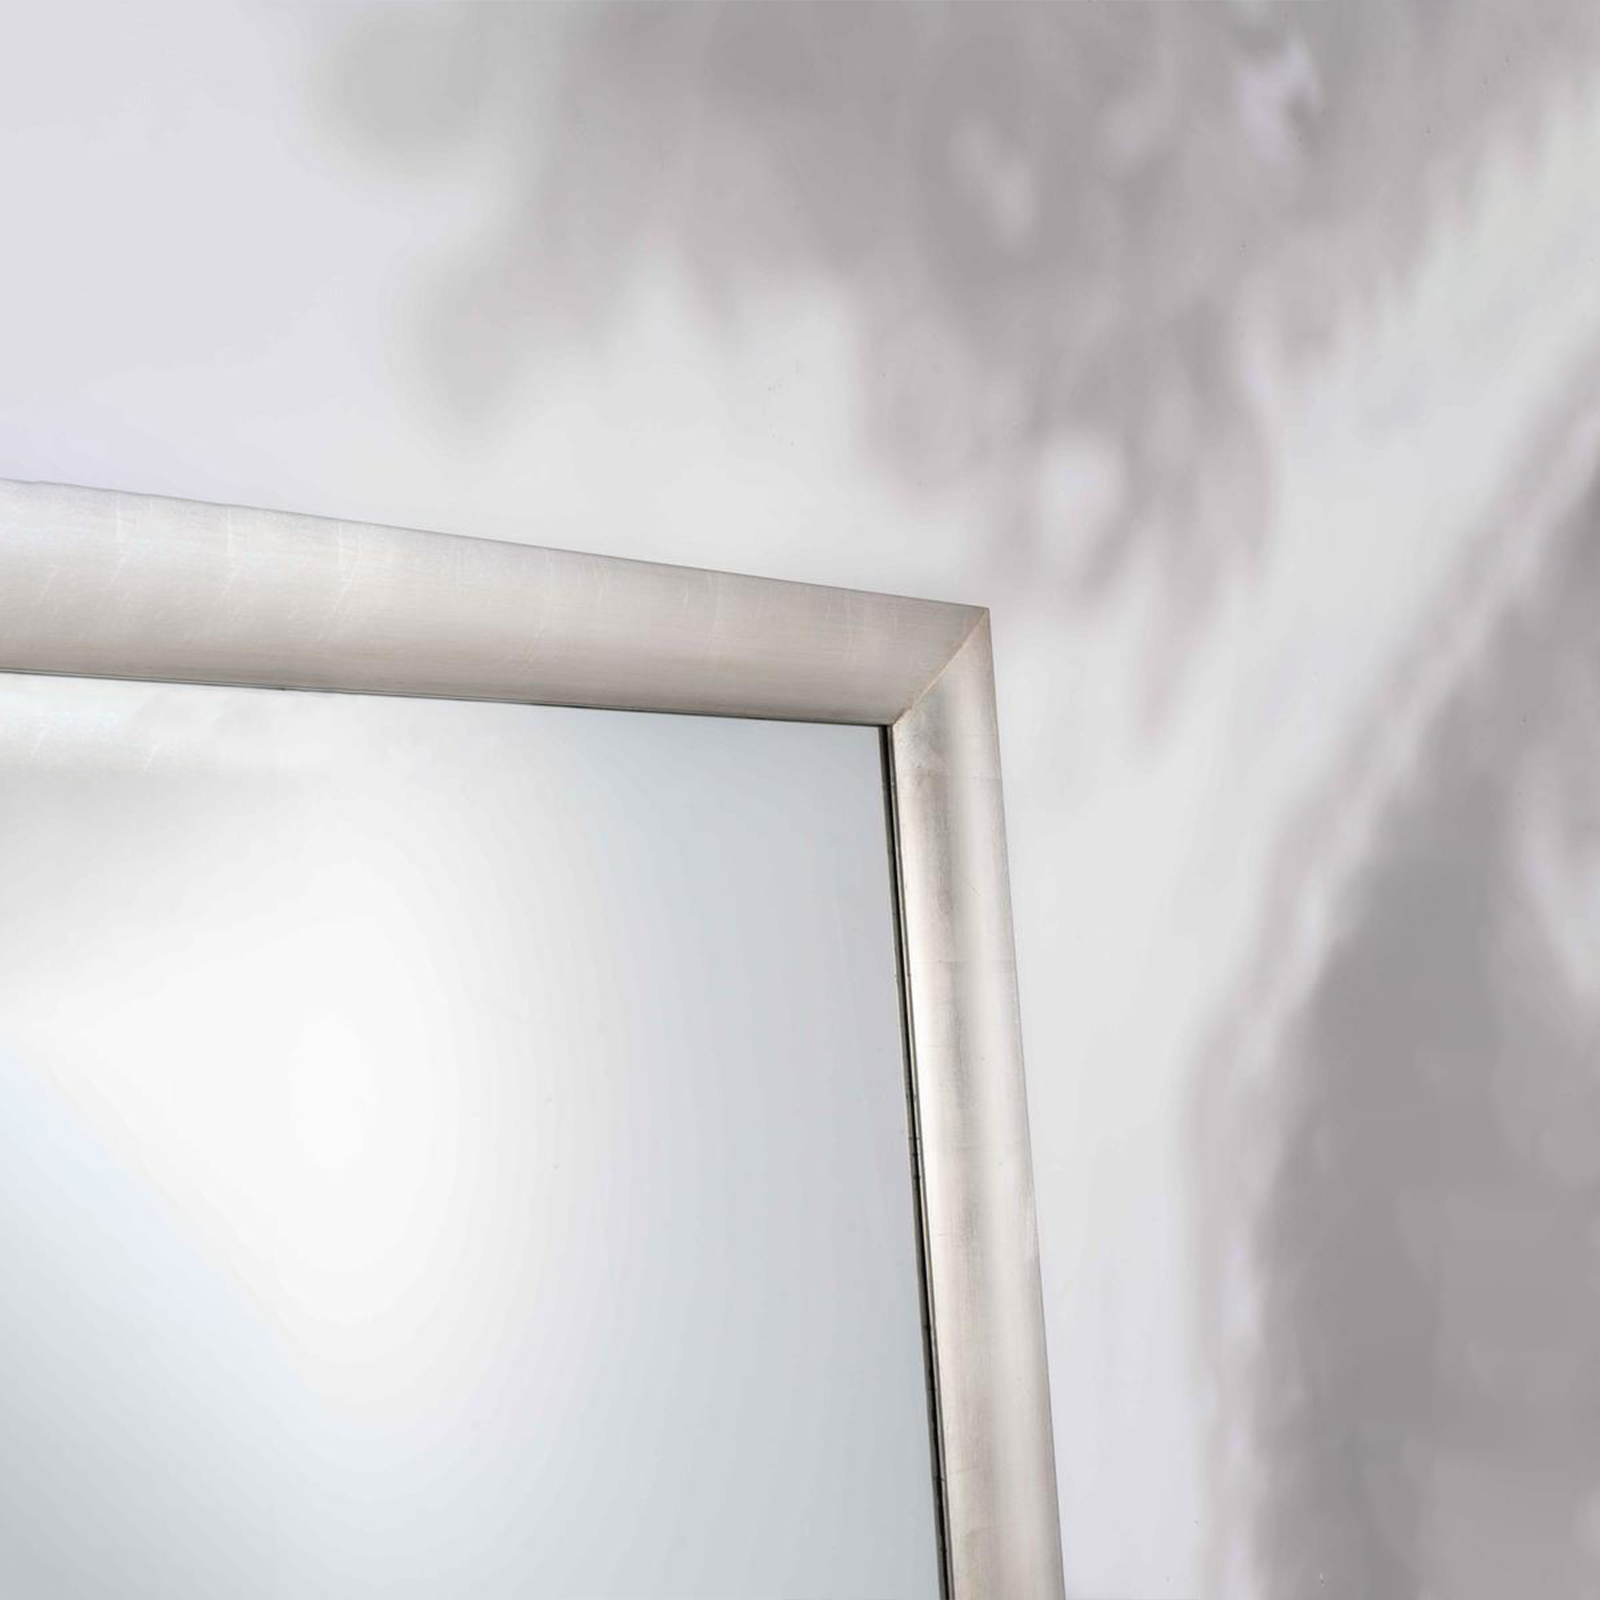 Espejo de pared largo "Enea" rectangular marco madera plata 81x40 cm 183h